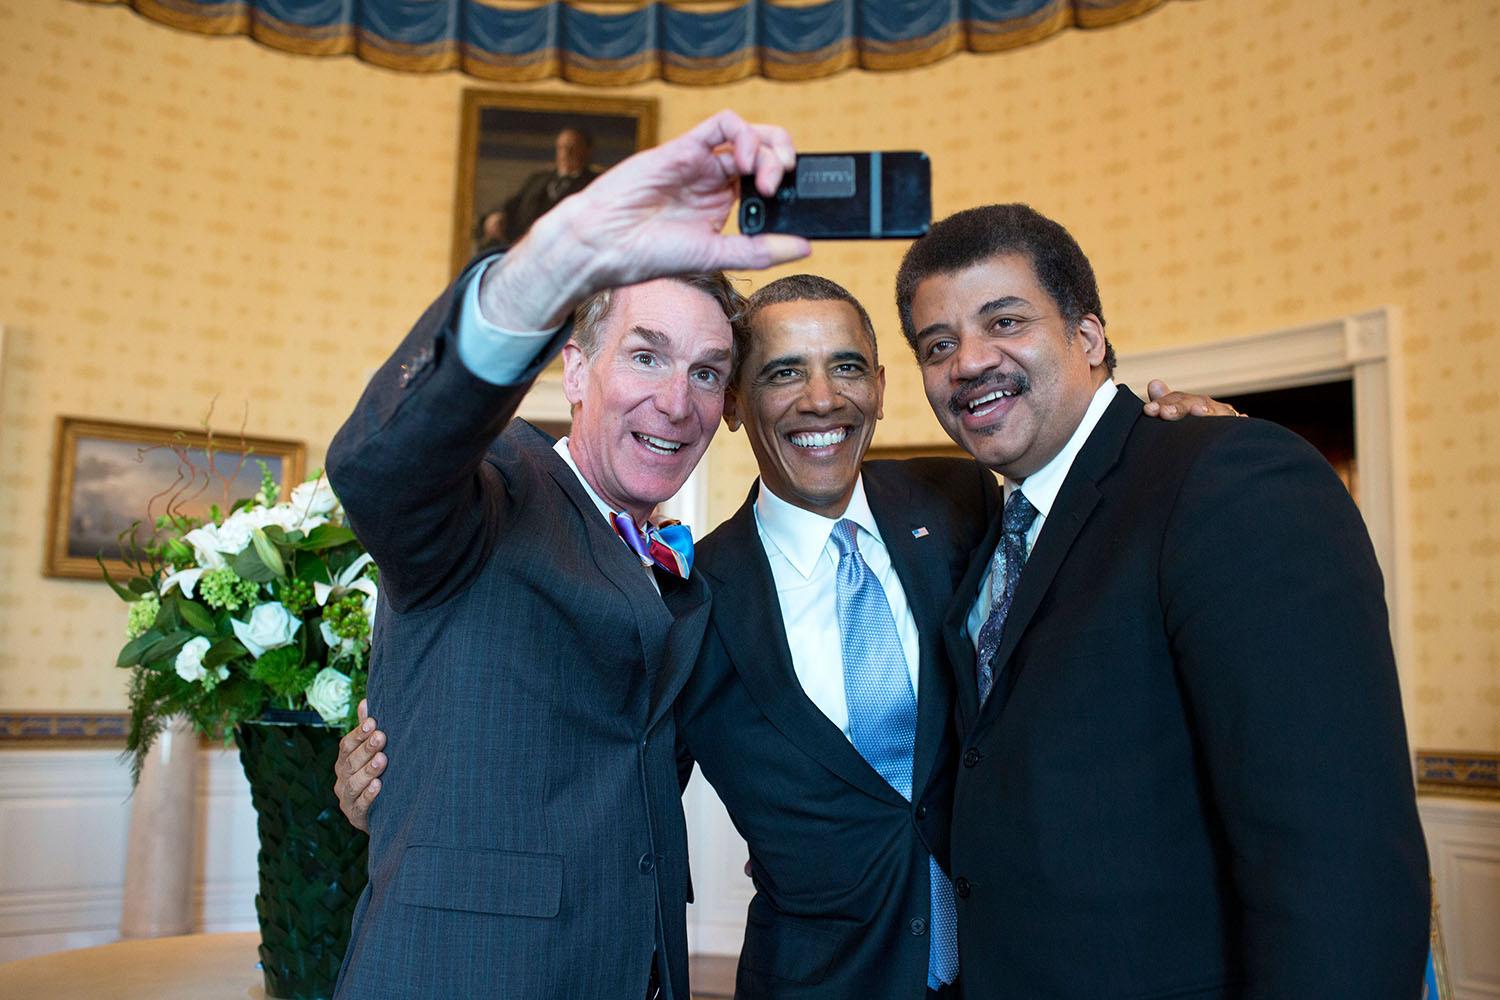 White House: Enough With The Damn Selfies Already